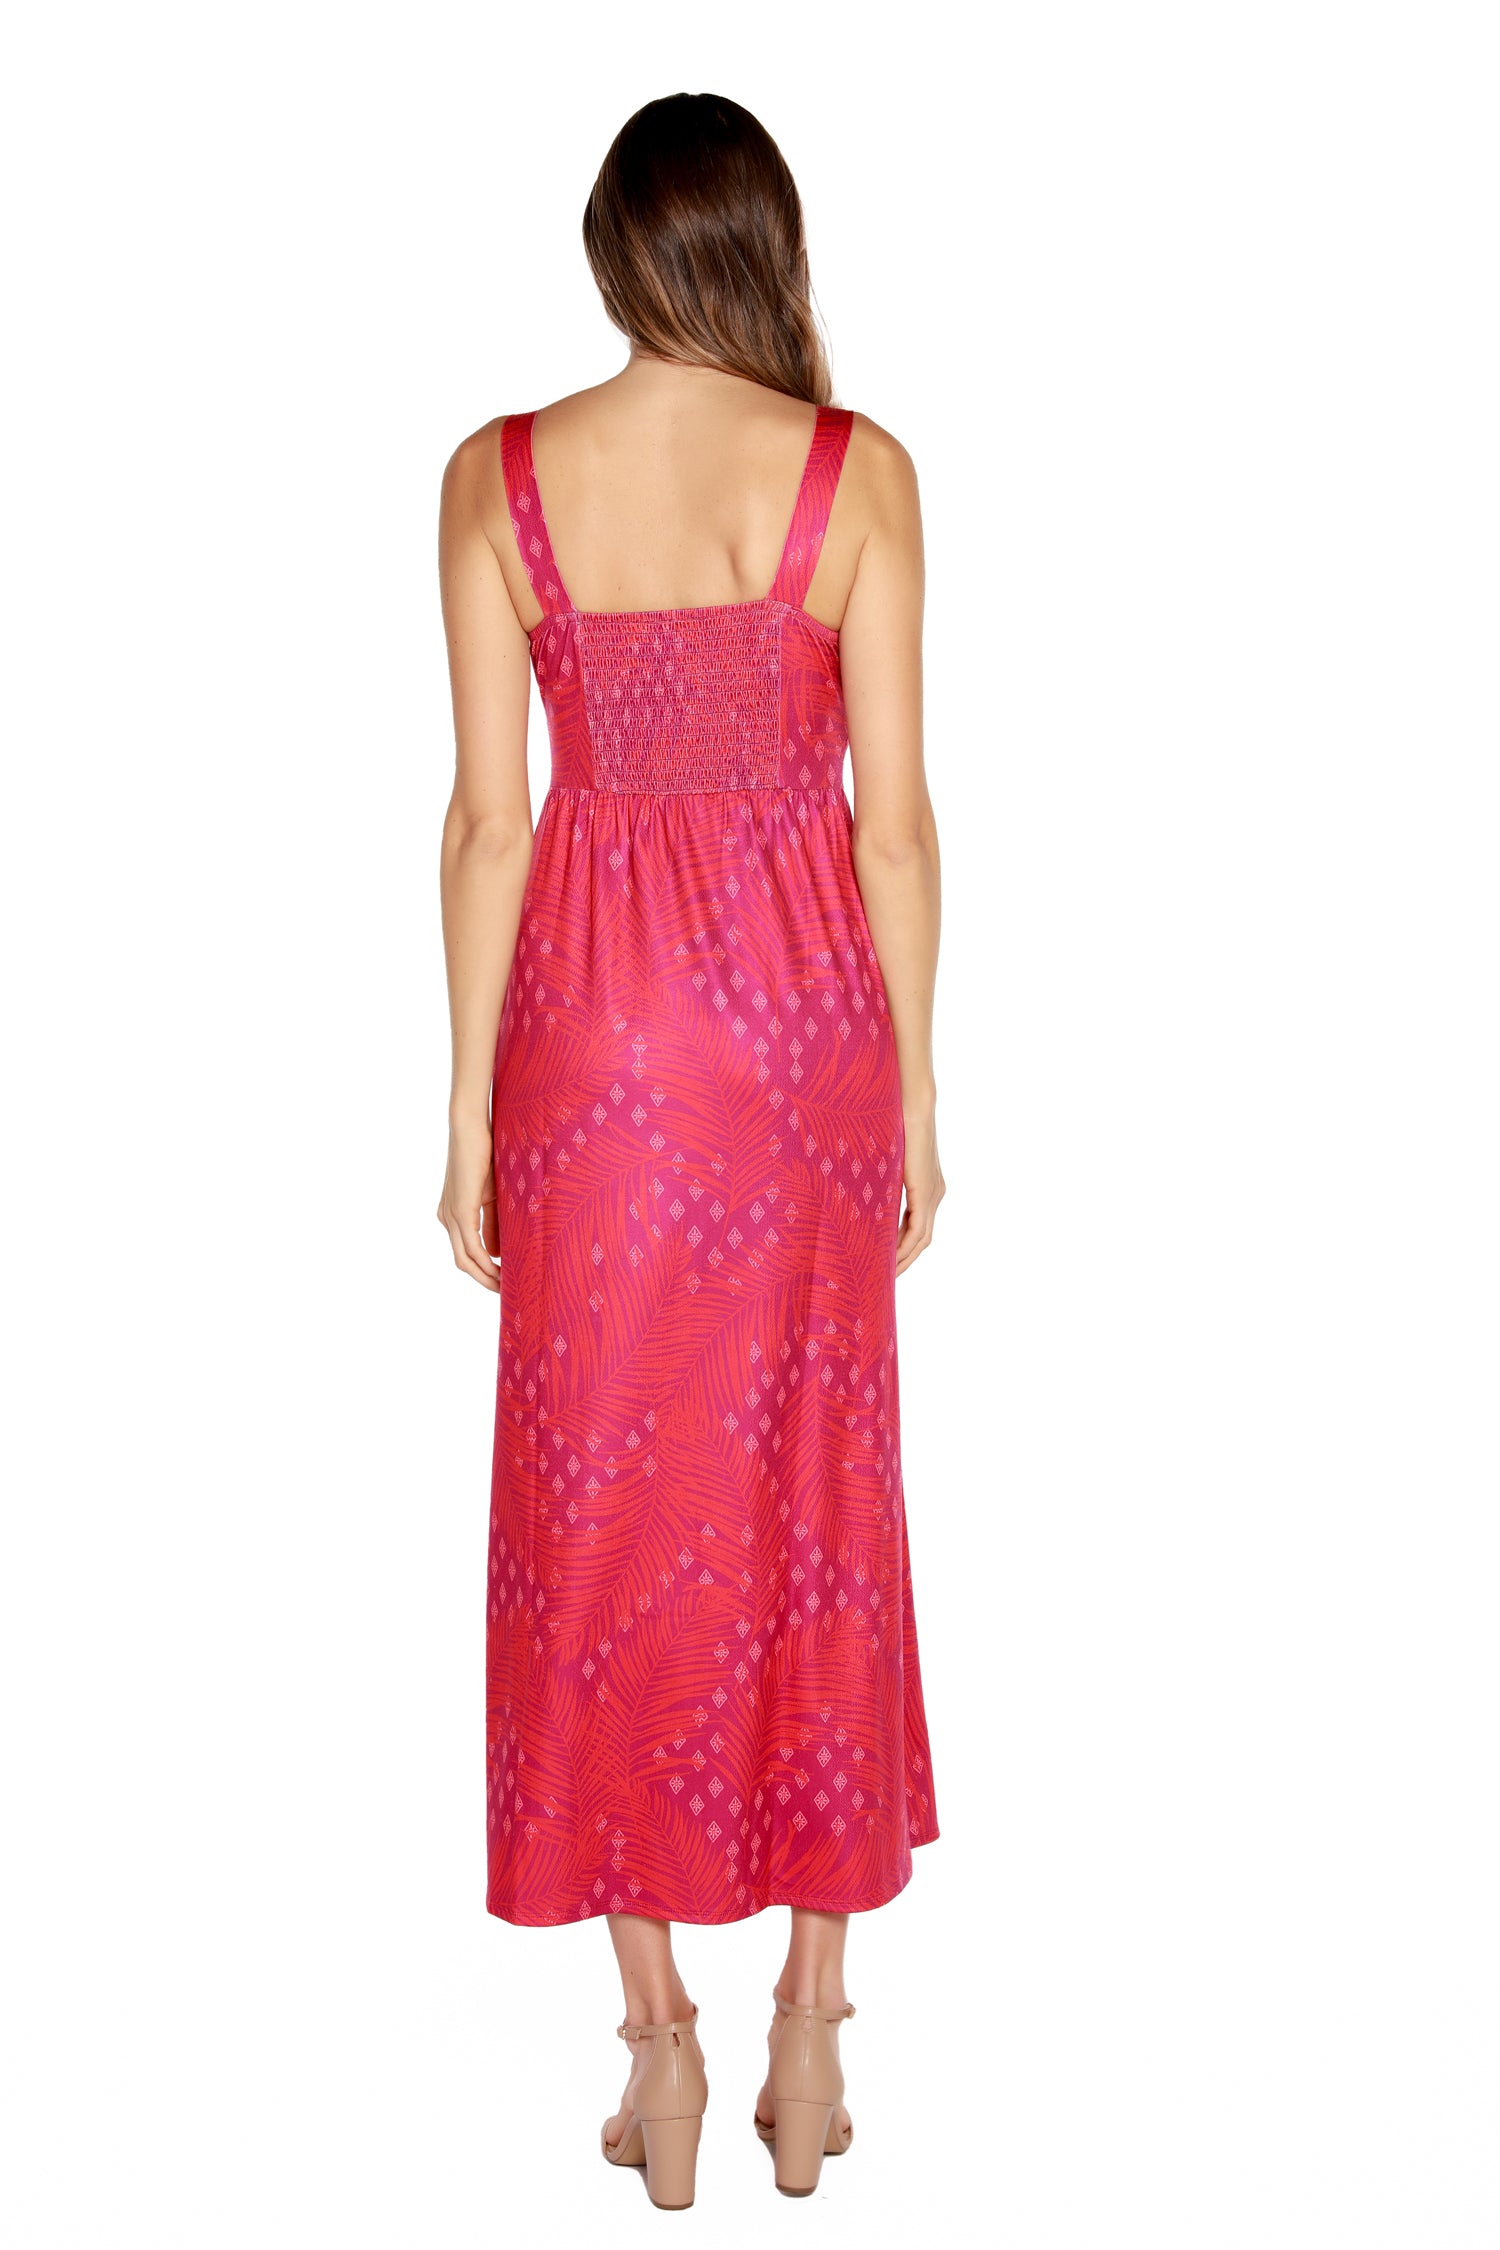 Women’s Bright Print Maxi Dress for Summer